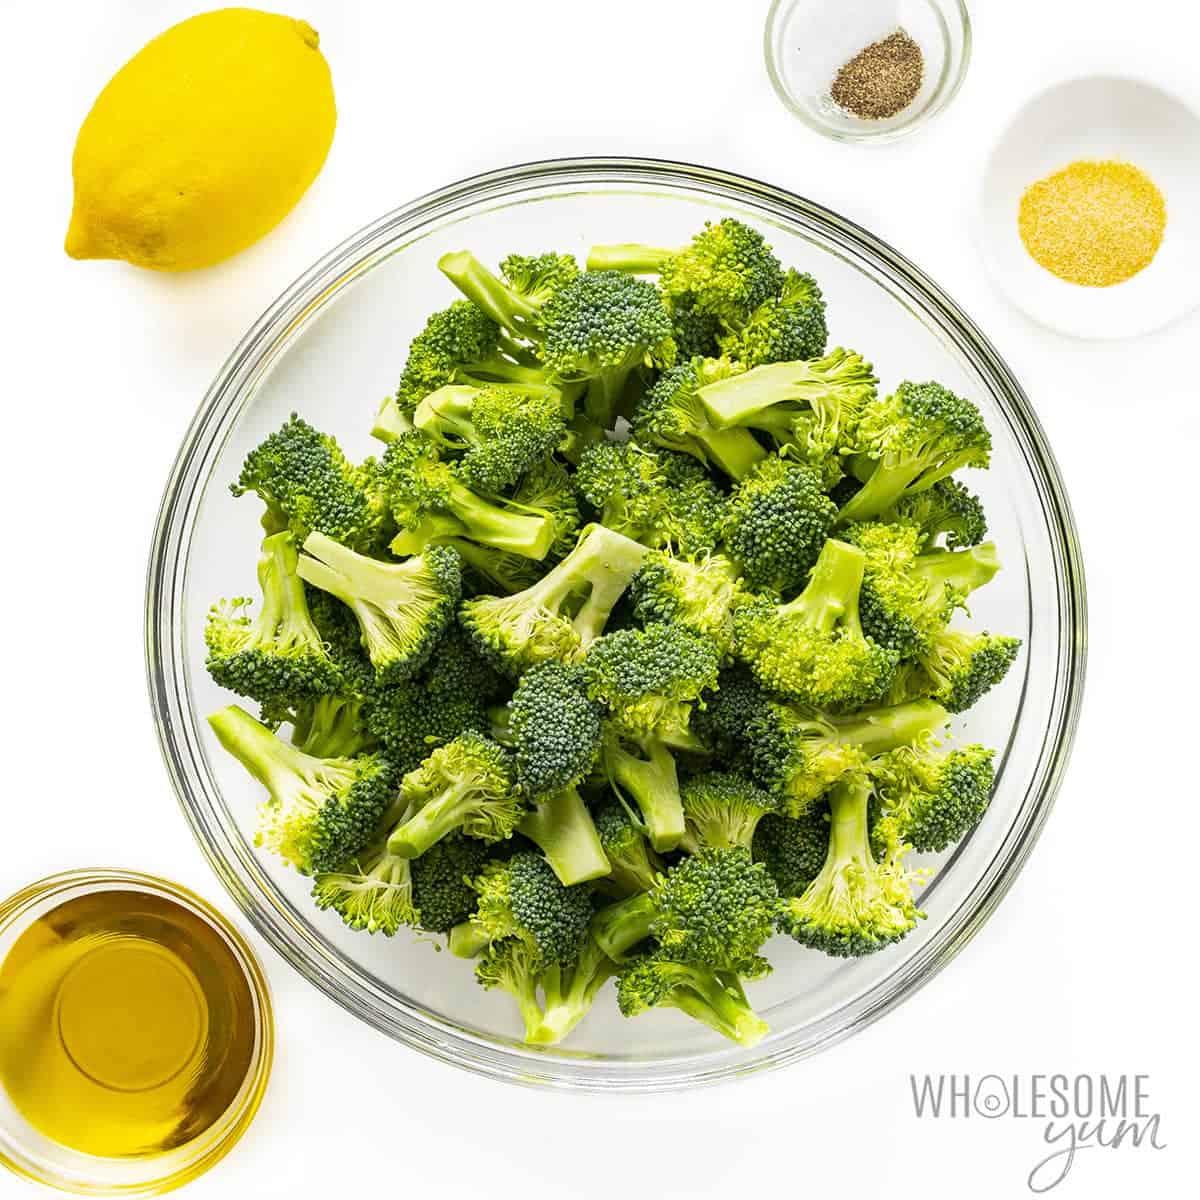 Air fryer broccoli ingredients in bowls